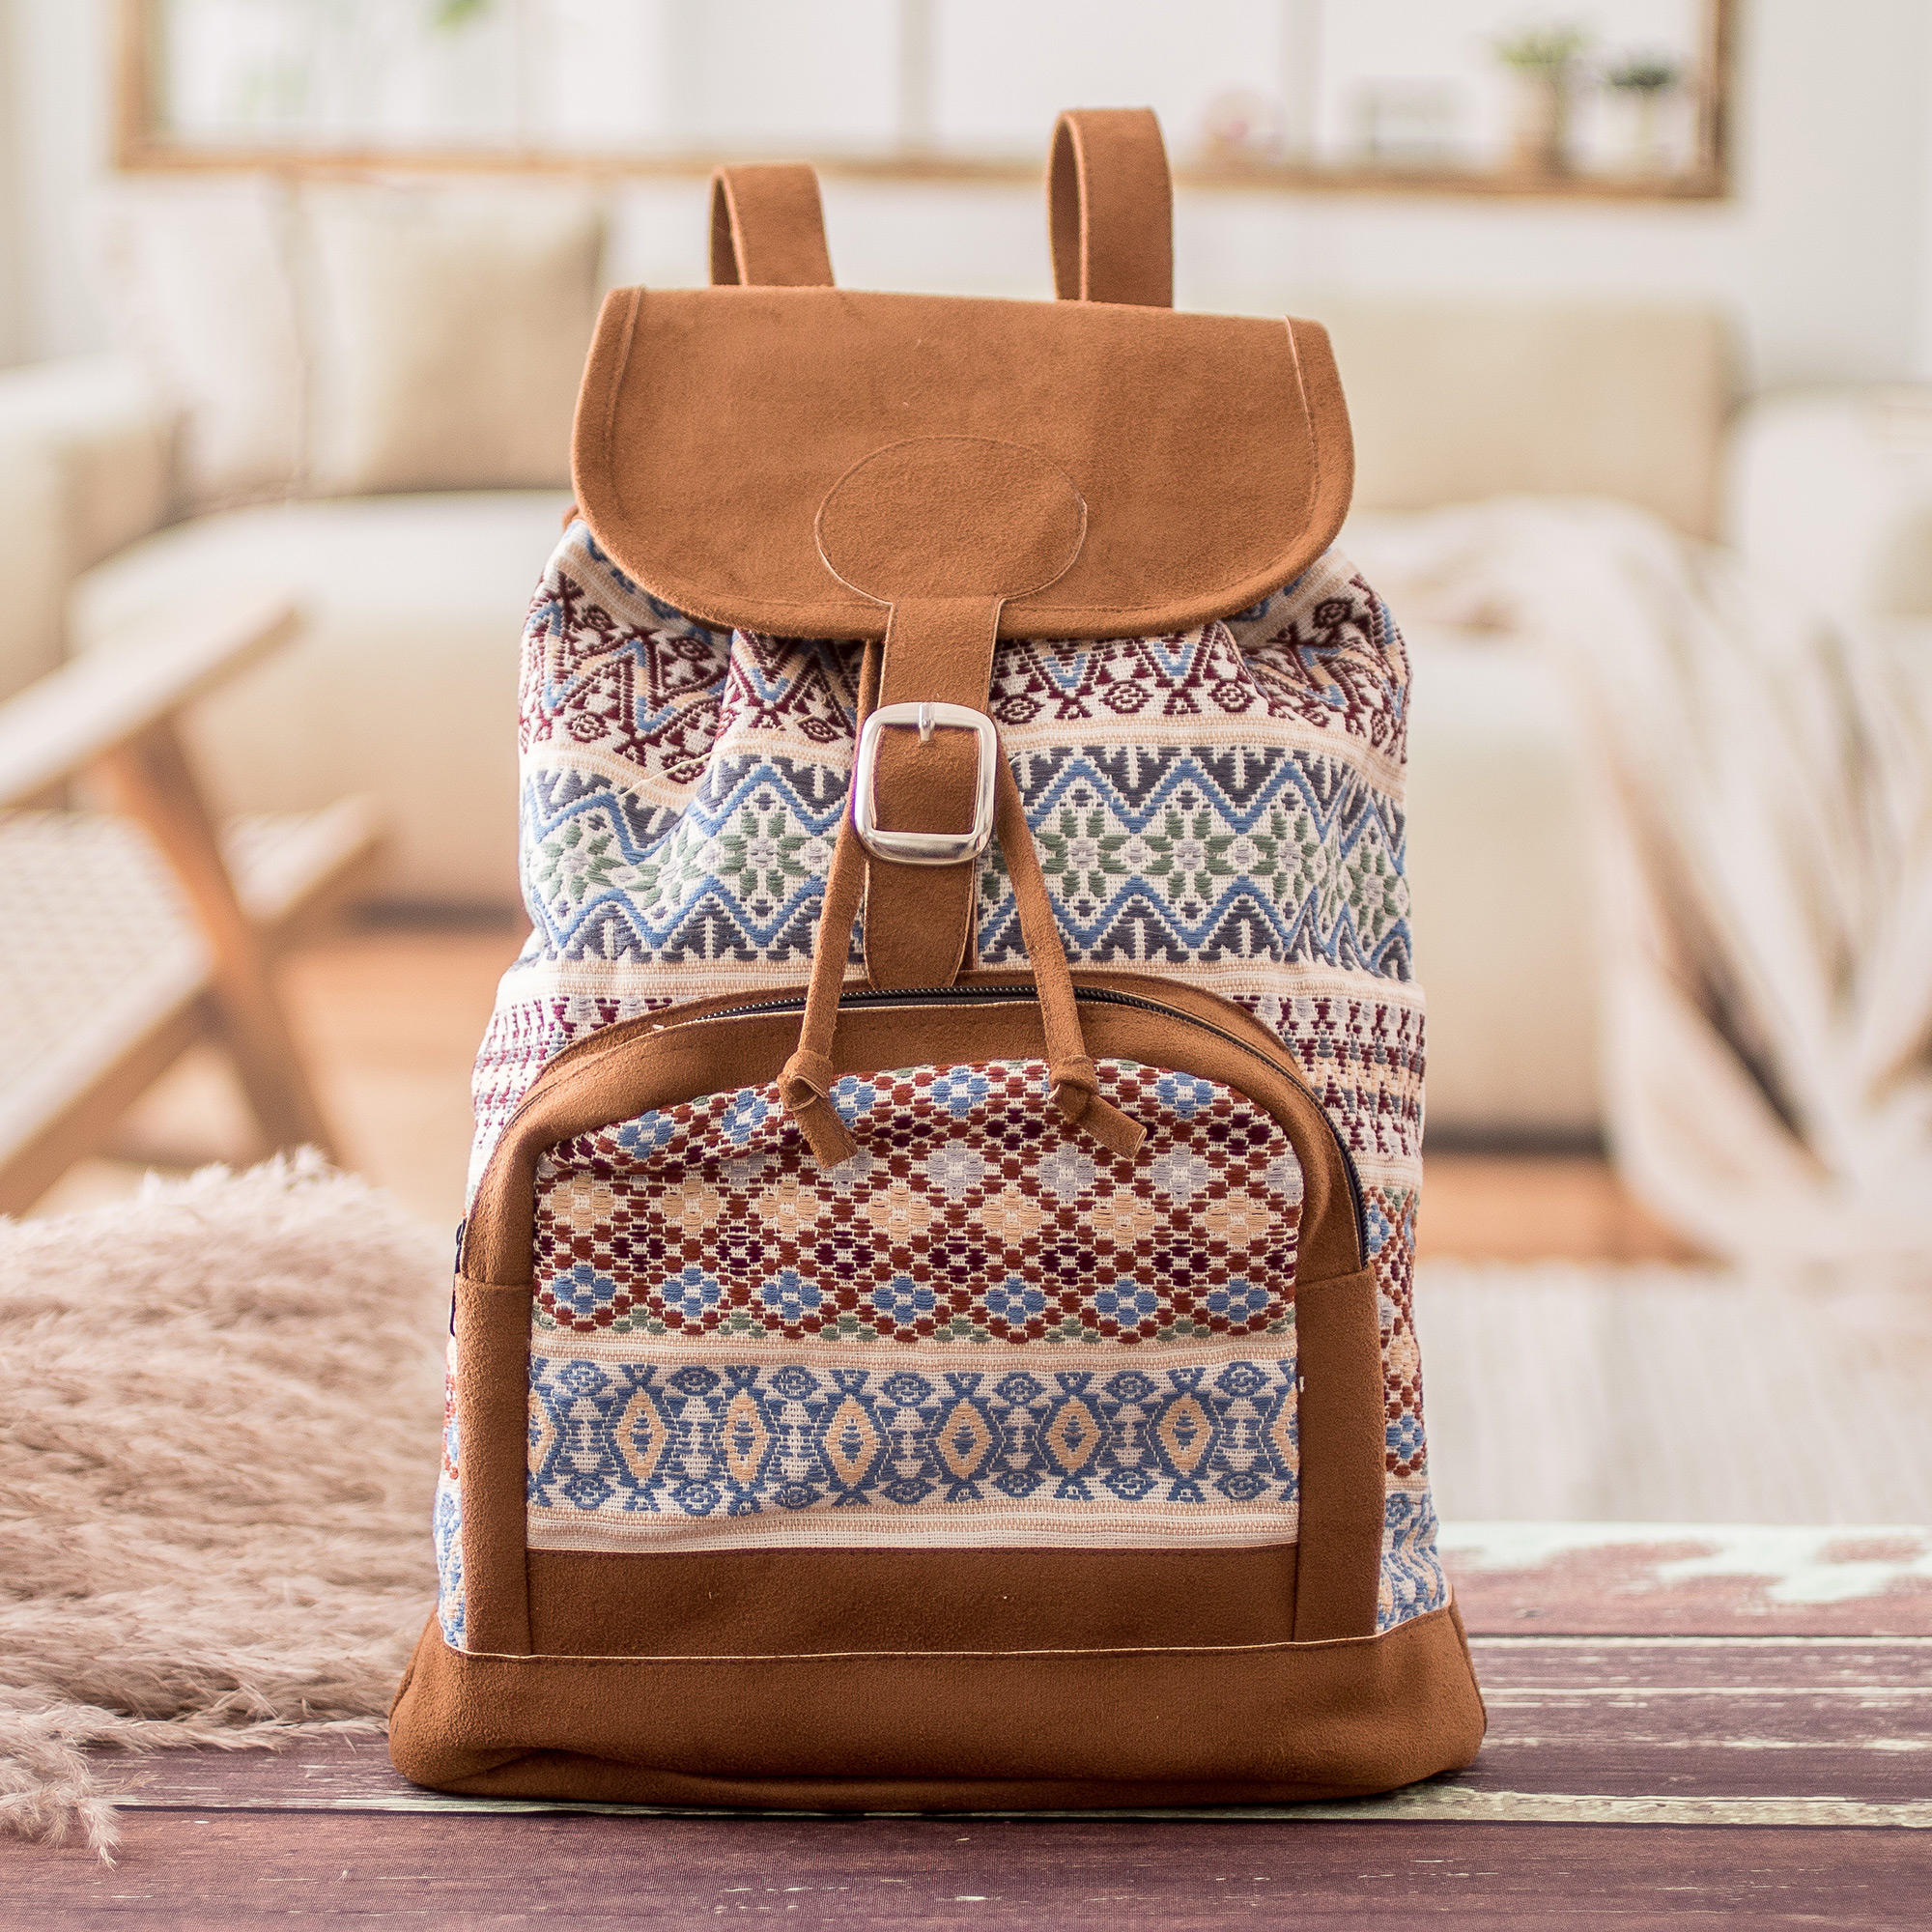 bags #backpacks #boho #bohochic #bohostyle #bohemian #accessories | Boho  backpack, Embellished backpack, Backpacks